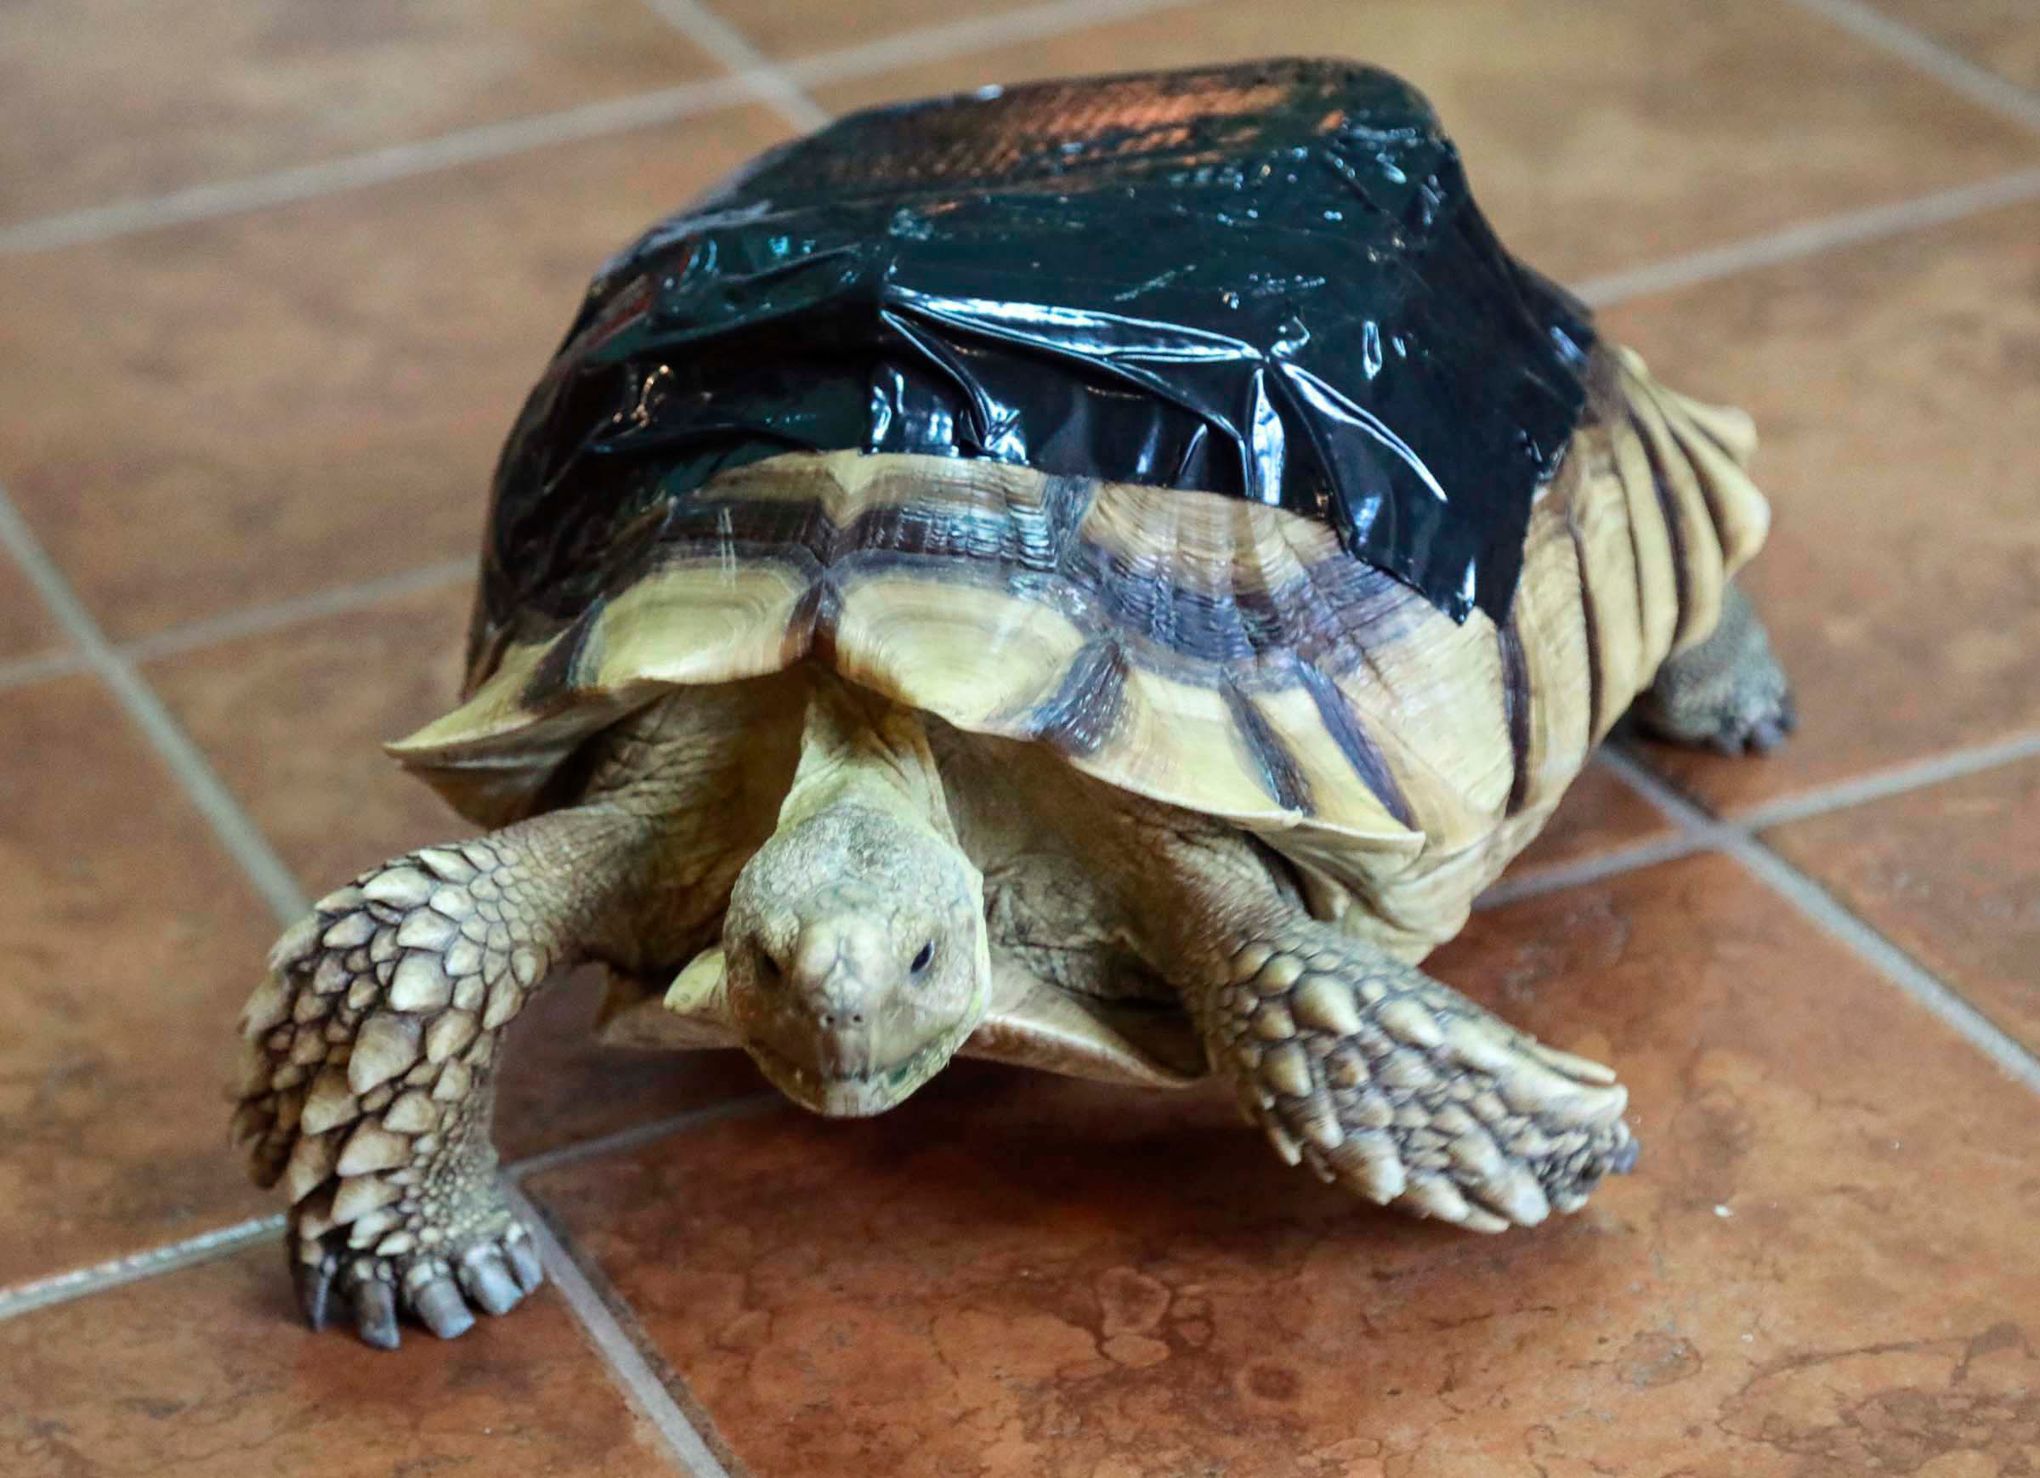 Shell injuries in tortoises - Veterinary Practice